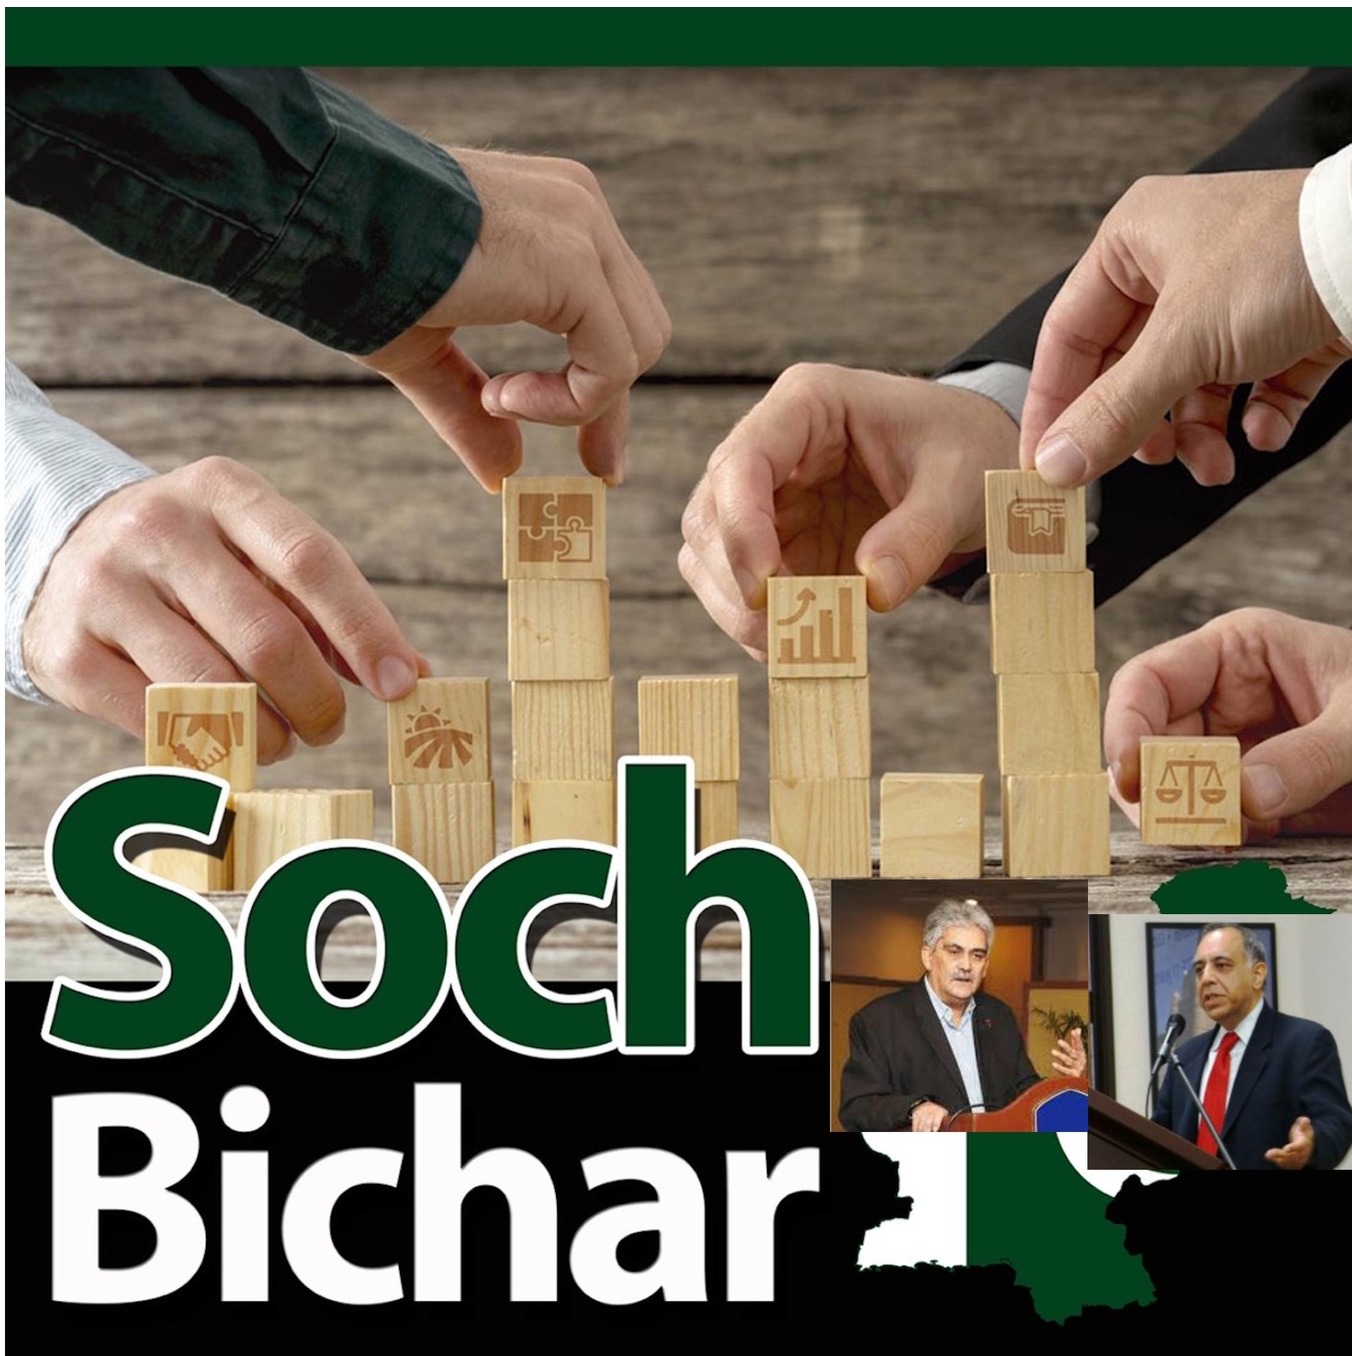 SochBichar